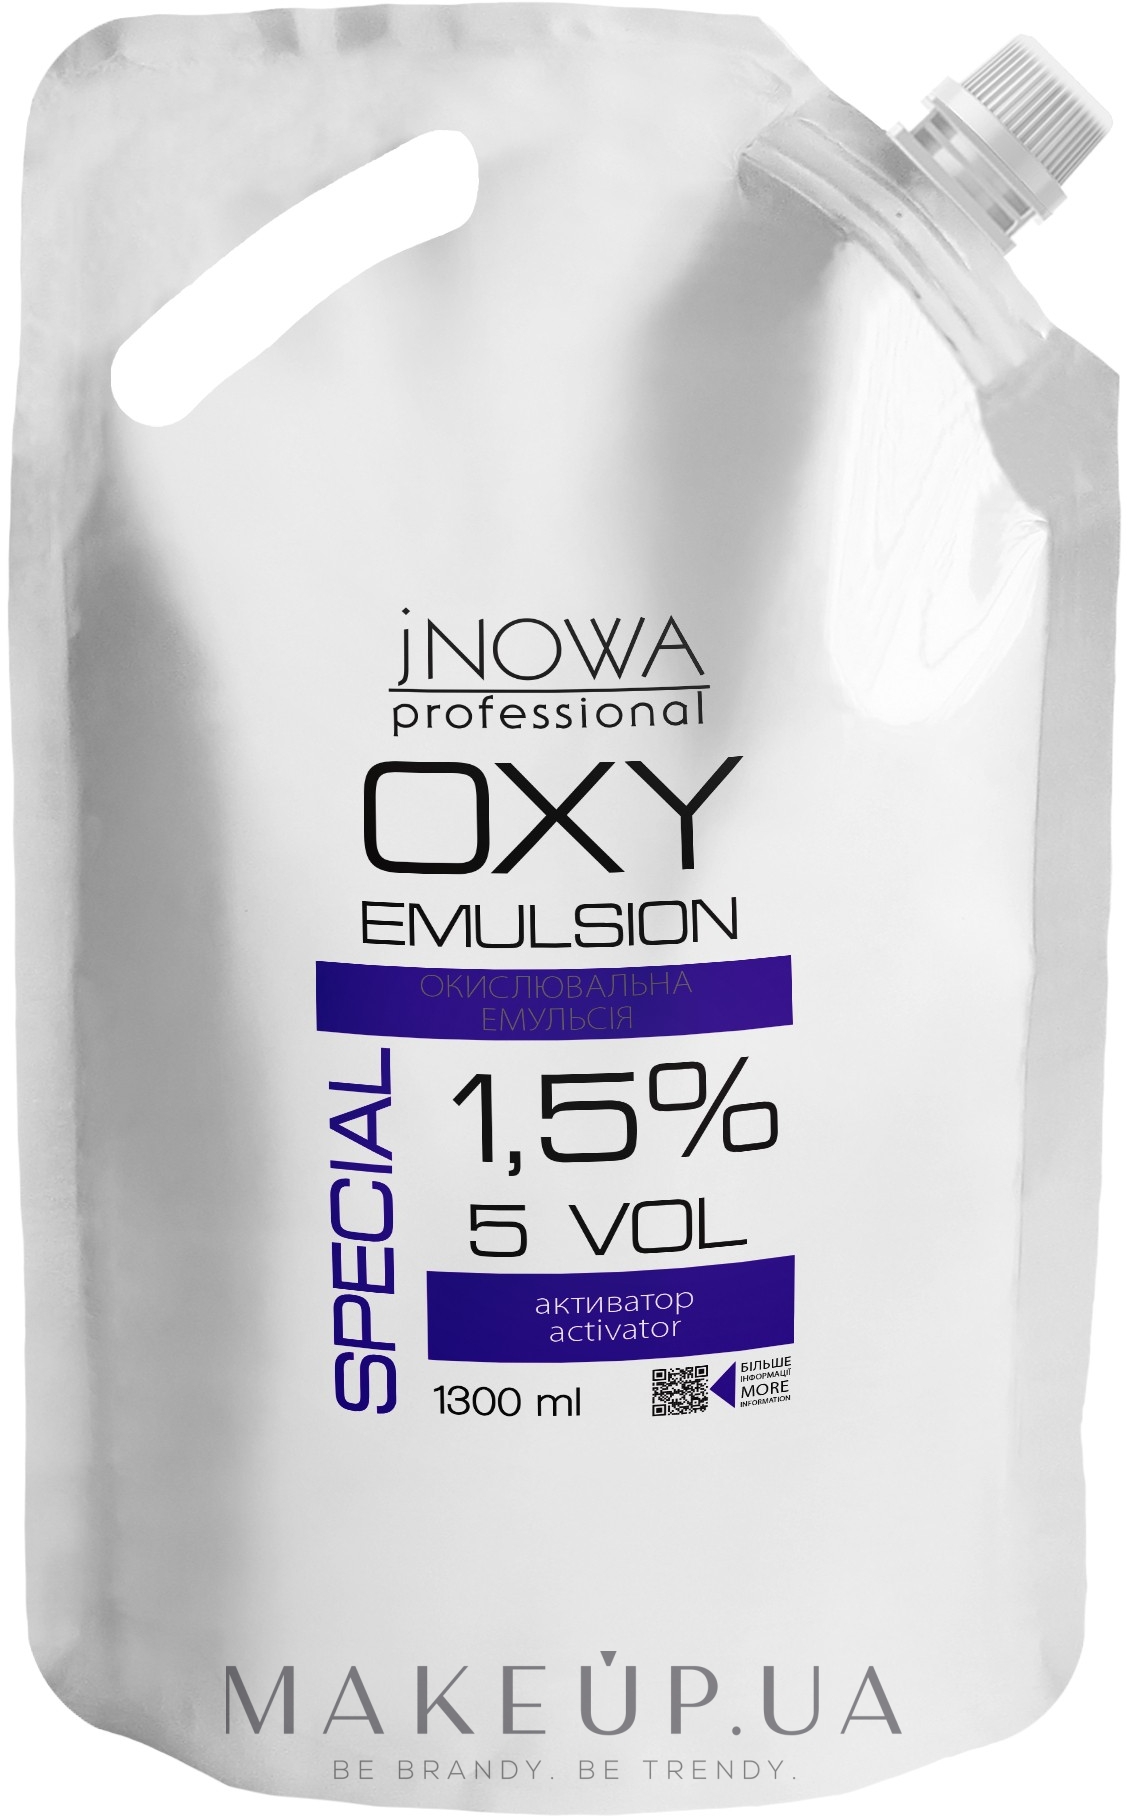 Окислювальна емульсія 1.5% - jNOWA Professional OXY Emulsion Special 5 vol (дой-пак) — фото 1300ml